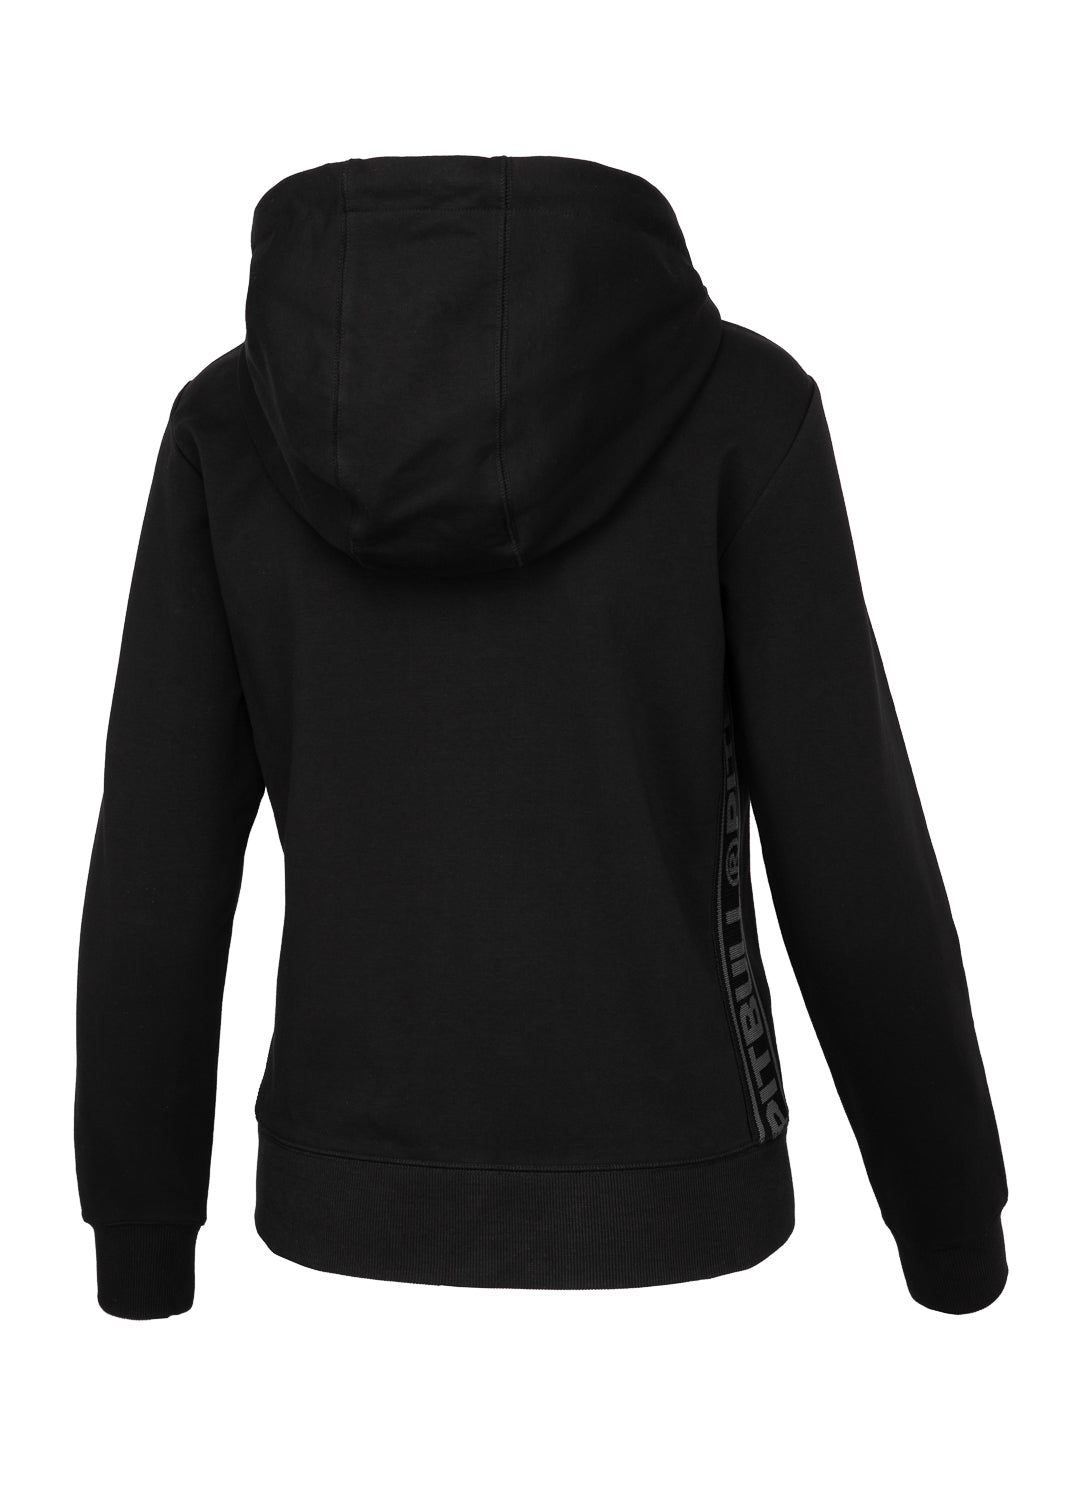 GENEVA FRENCH TERRY Black hoodie.